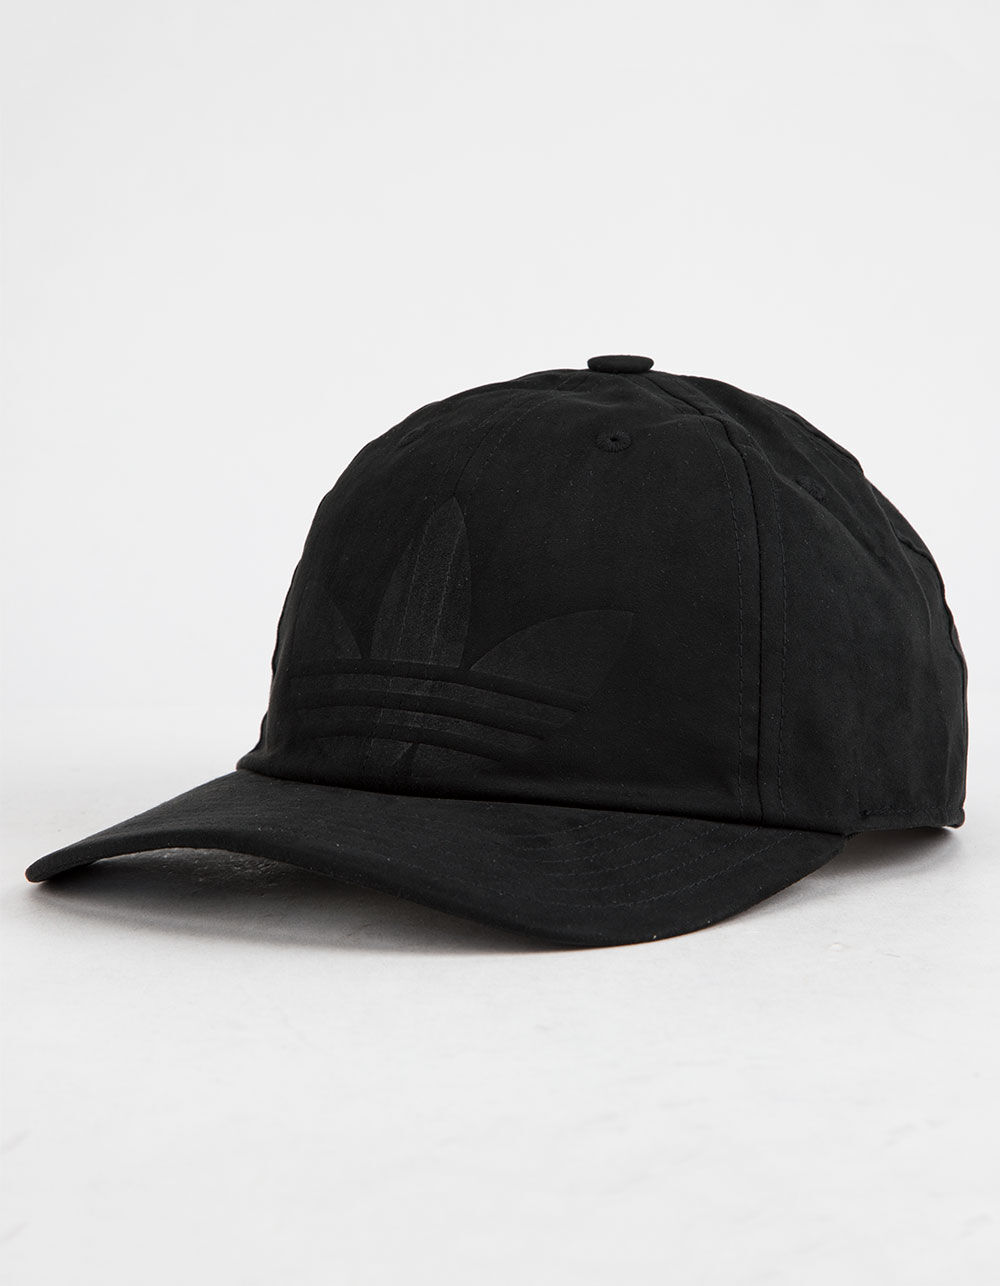 ADIDAS Originals Relaxed Deboss Black Mens Strapback Hat image number 0